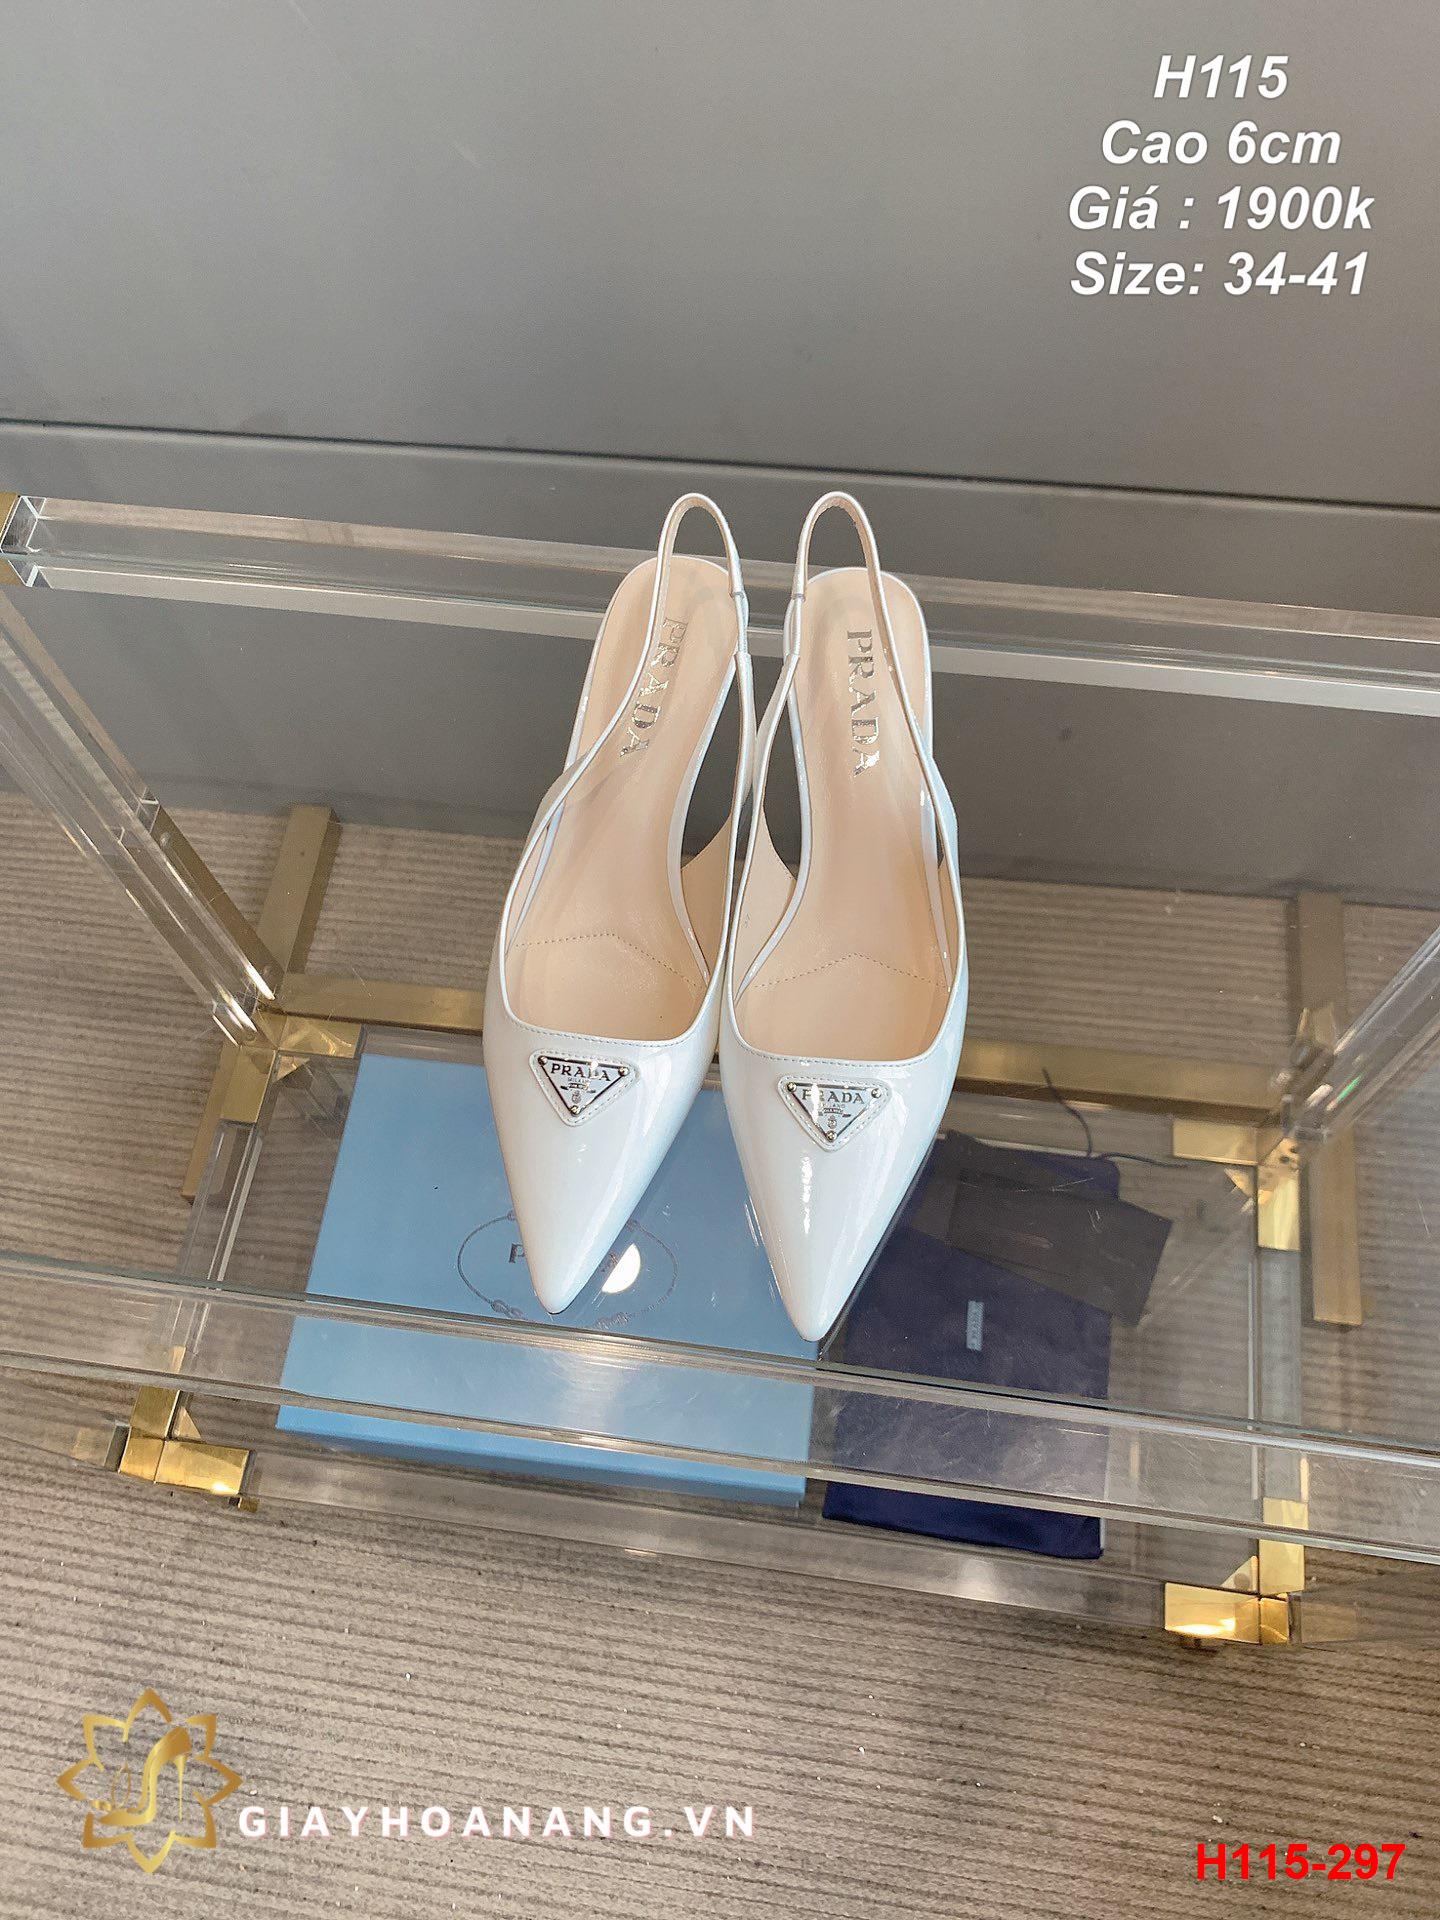 H115-297 Prada sandal cao 6cm  siêu cấp